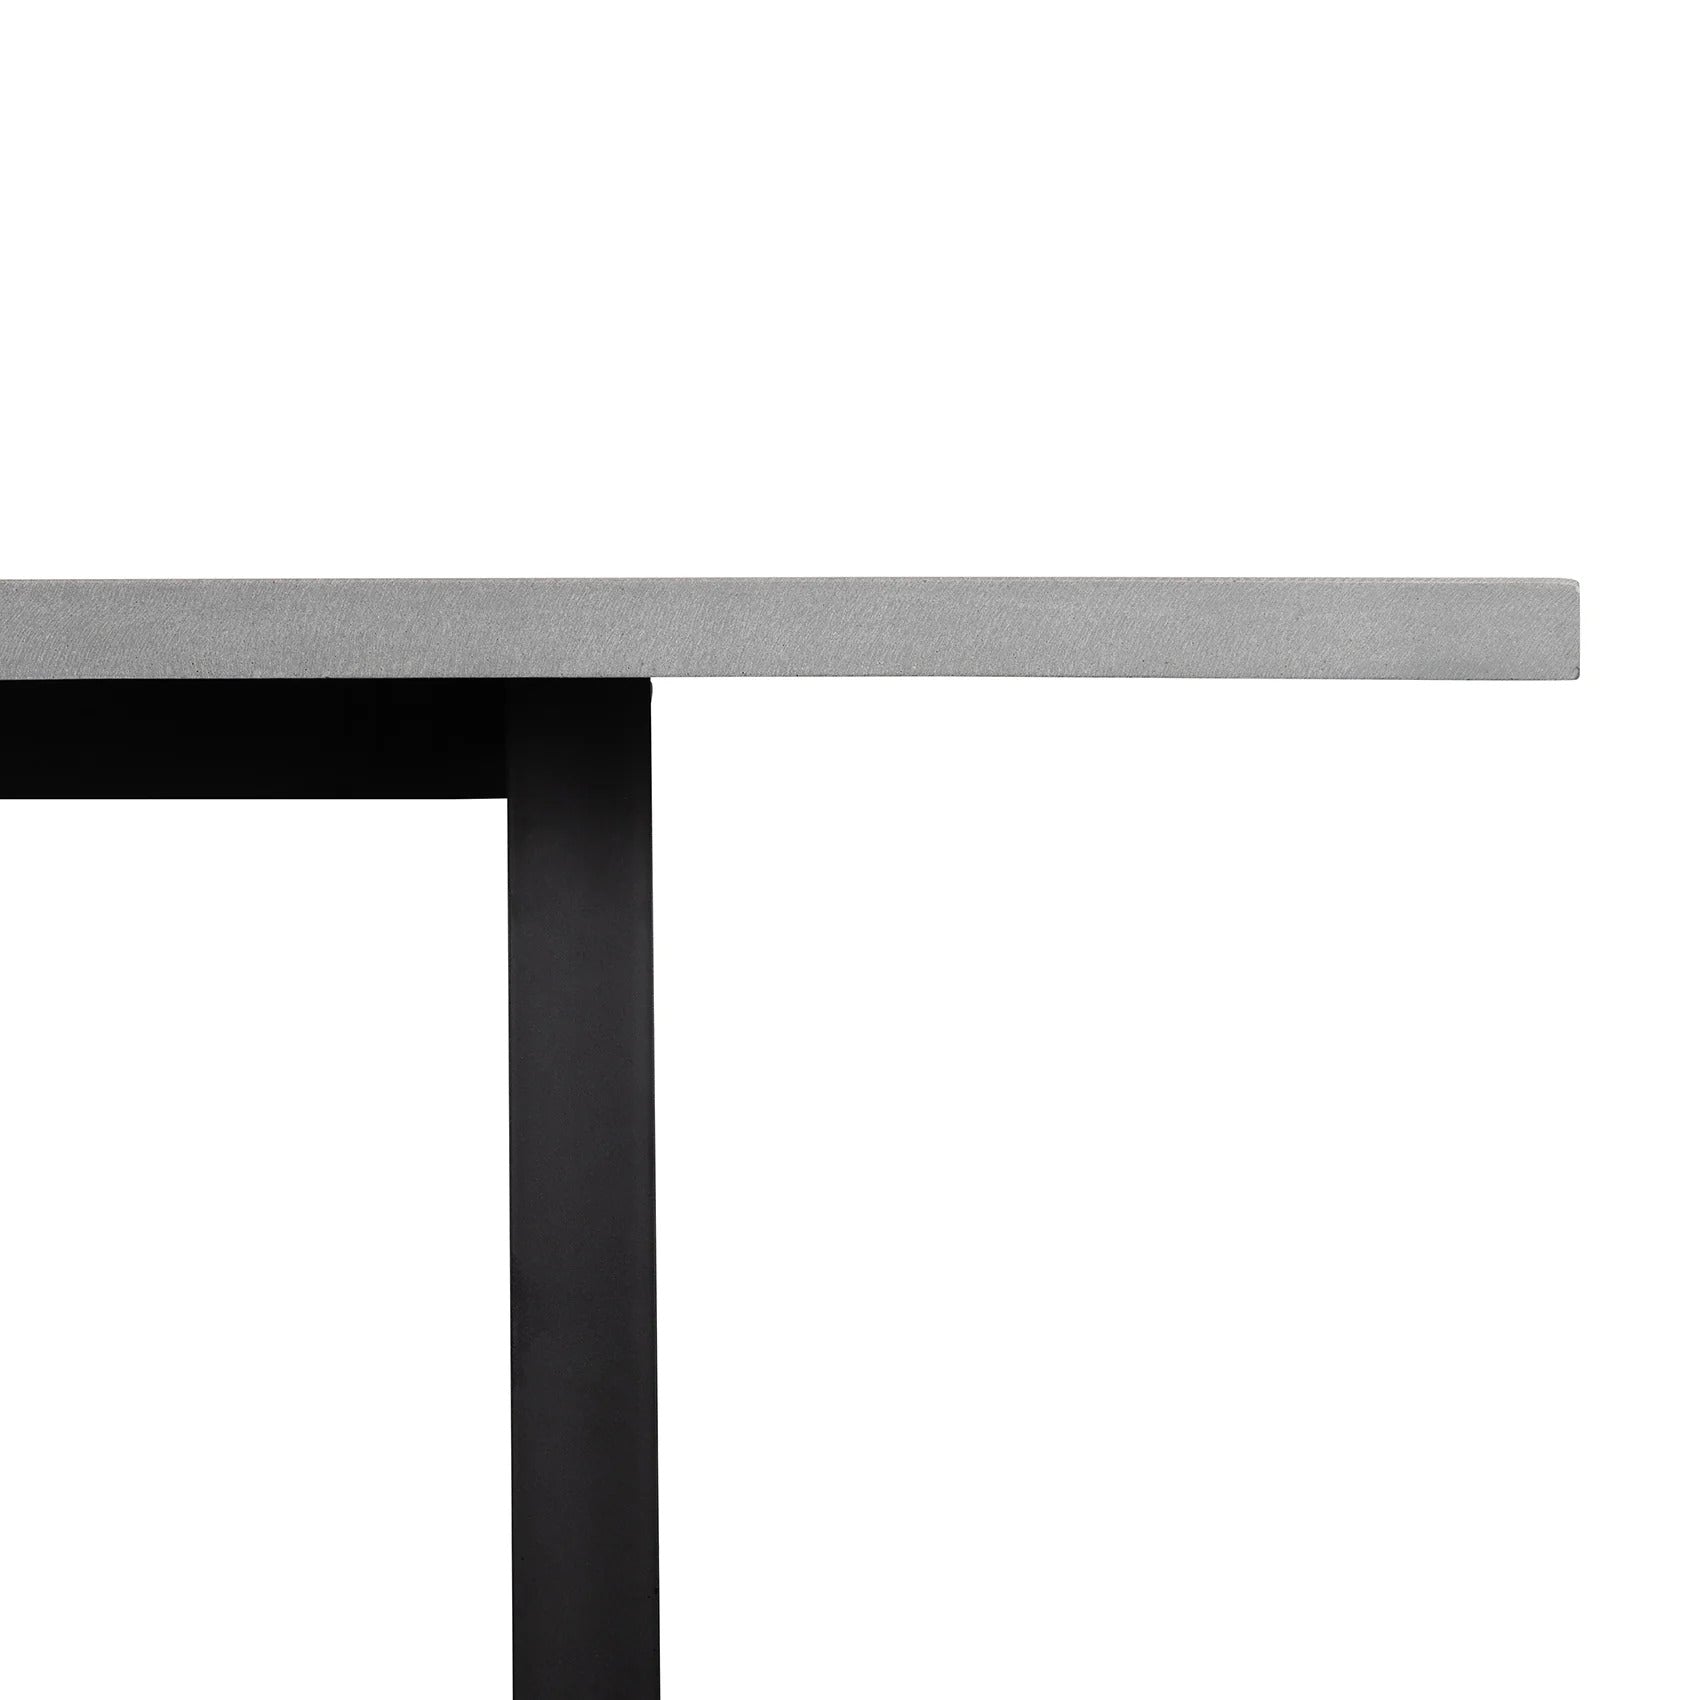 Sierra Rectangular Dining Table (Pebble Grey with Black Metal Legs).